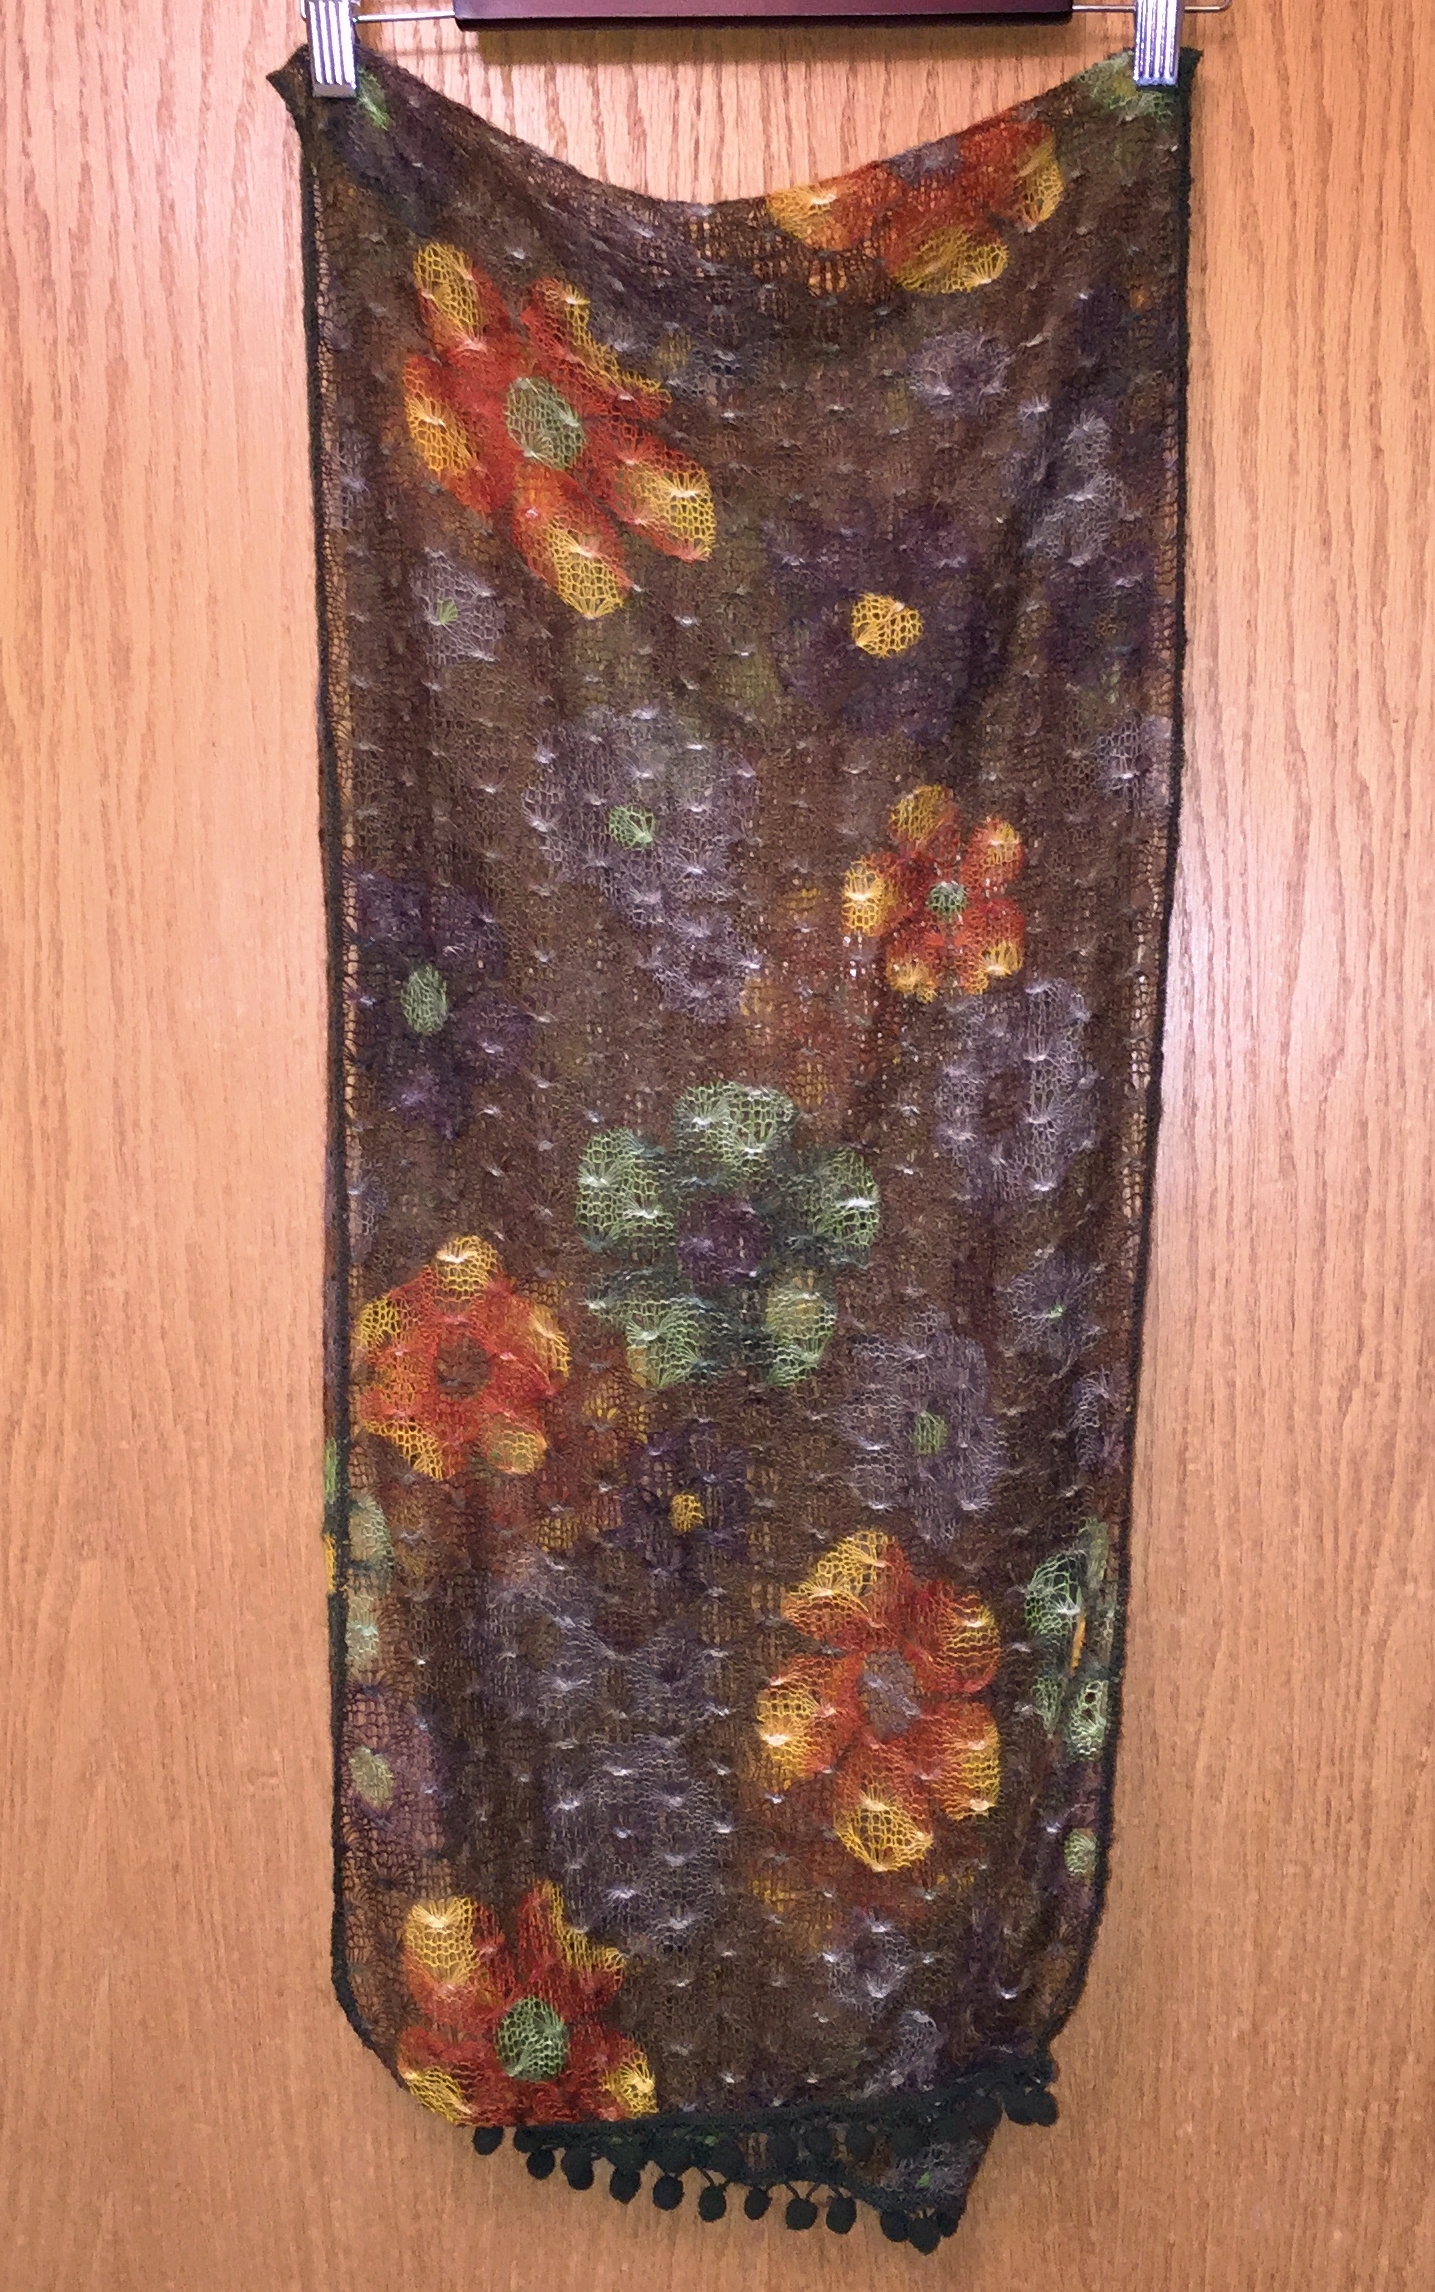 Retro-vibe flower print scarf $2.80